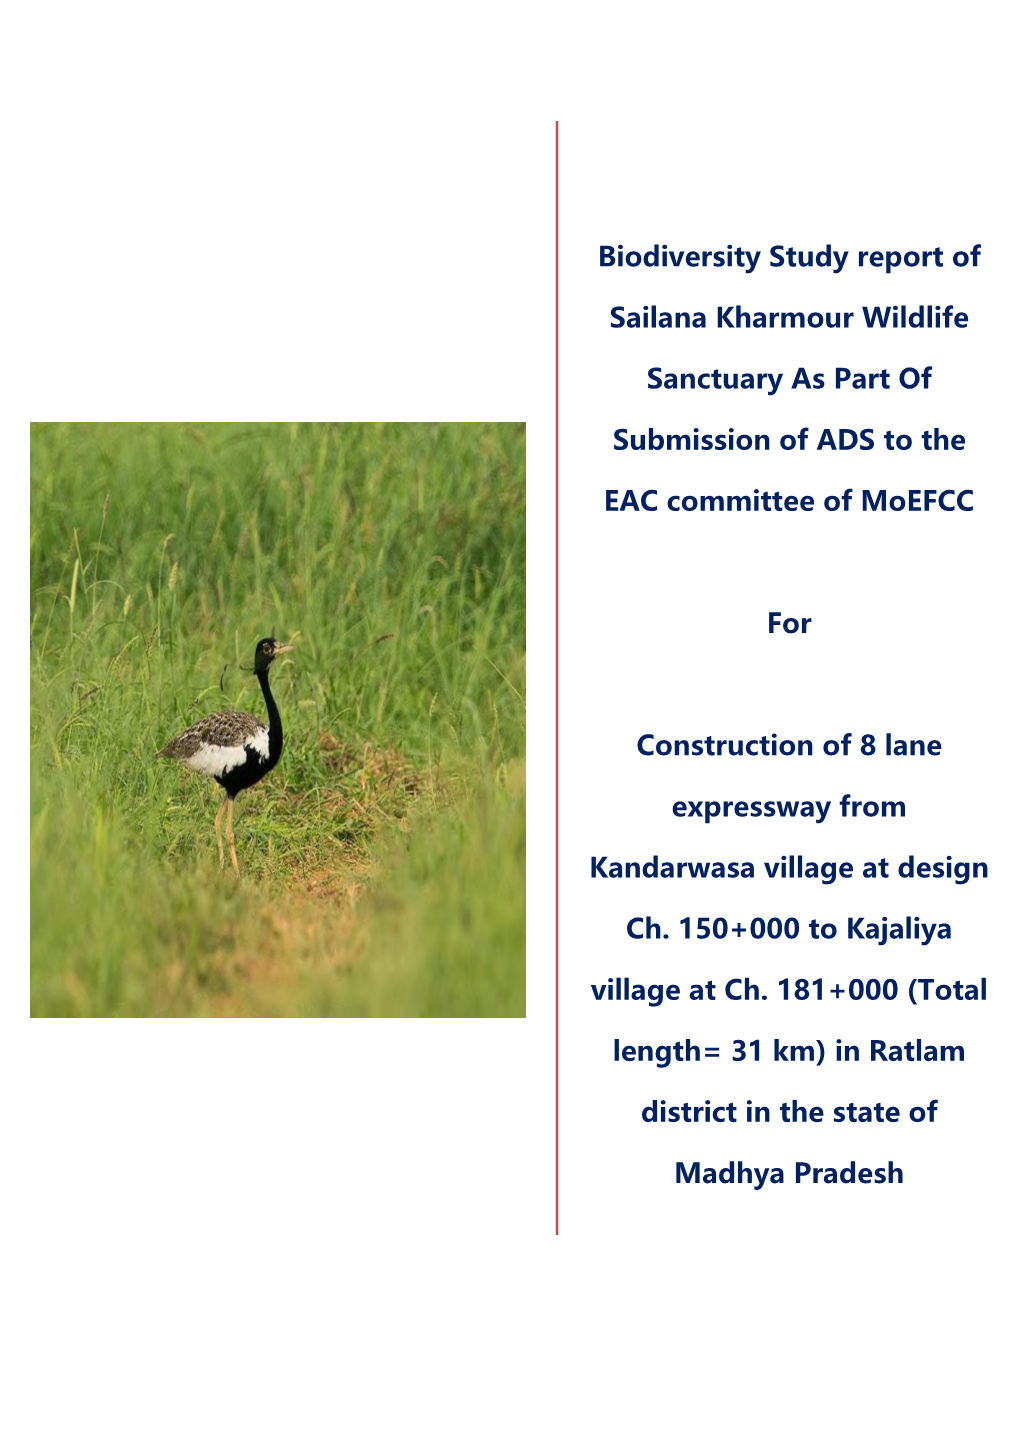 Biodiversity Study Report of Sailana Kharmour Wildlife Sanctuary As